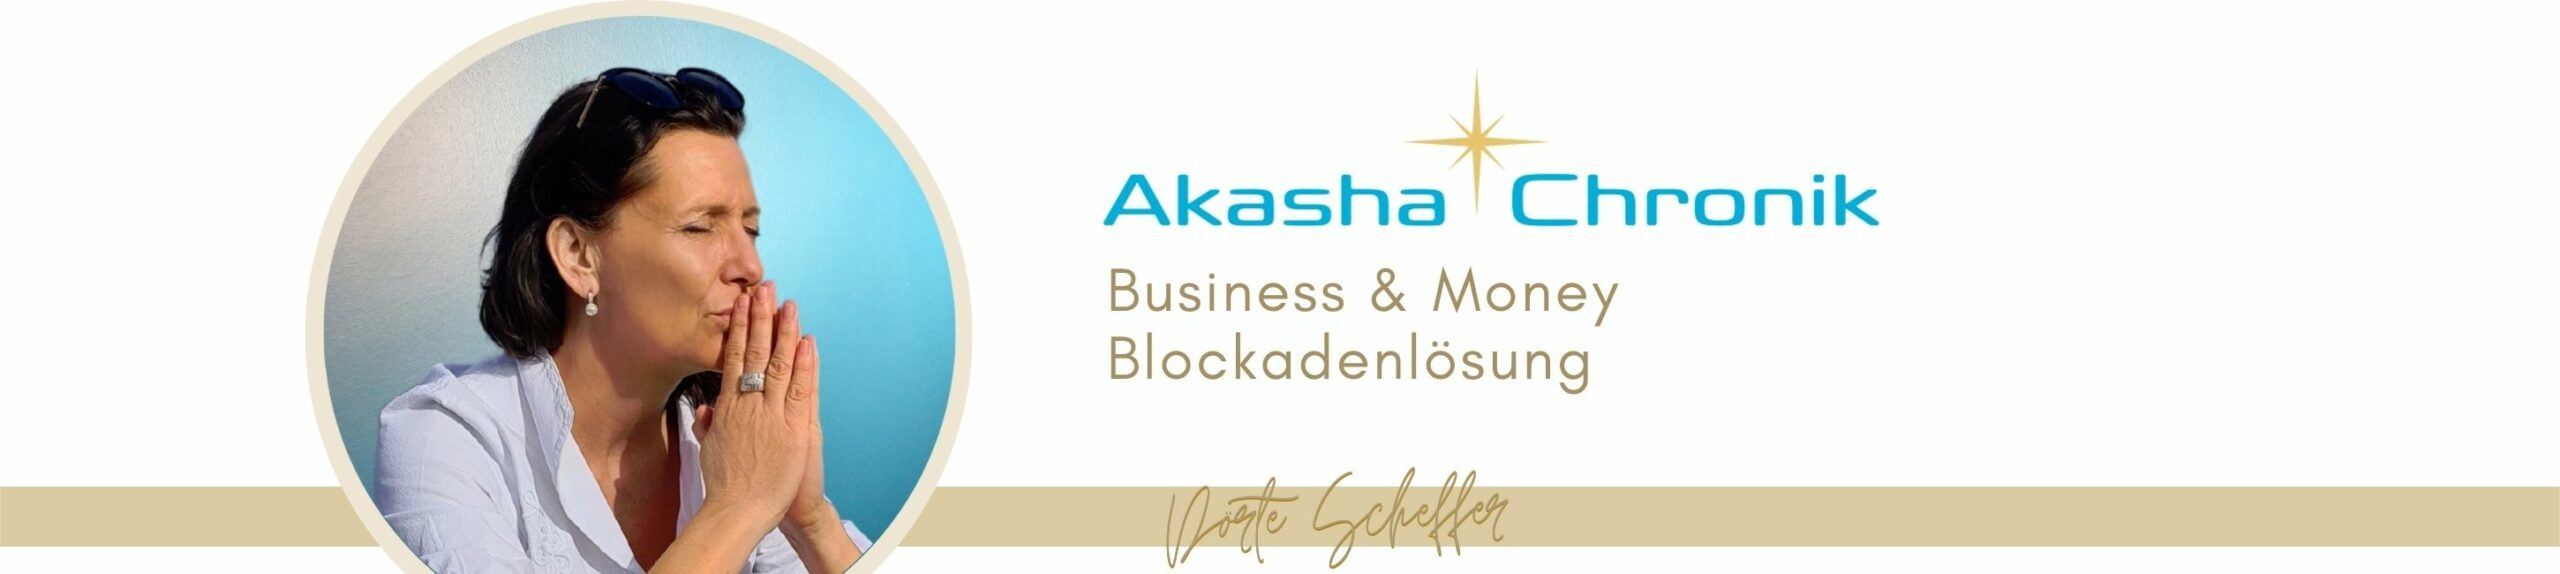 Akasha Chronik Business & Money Blockadenlösung